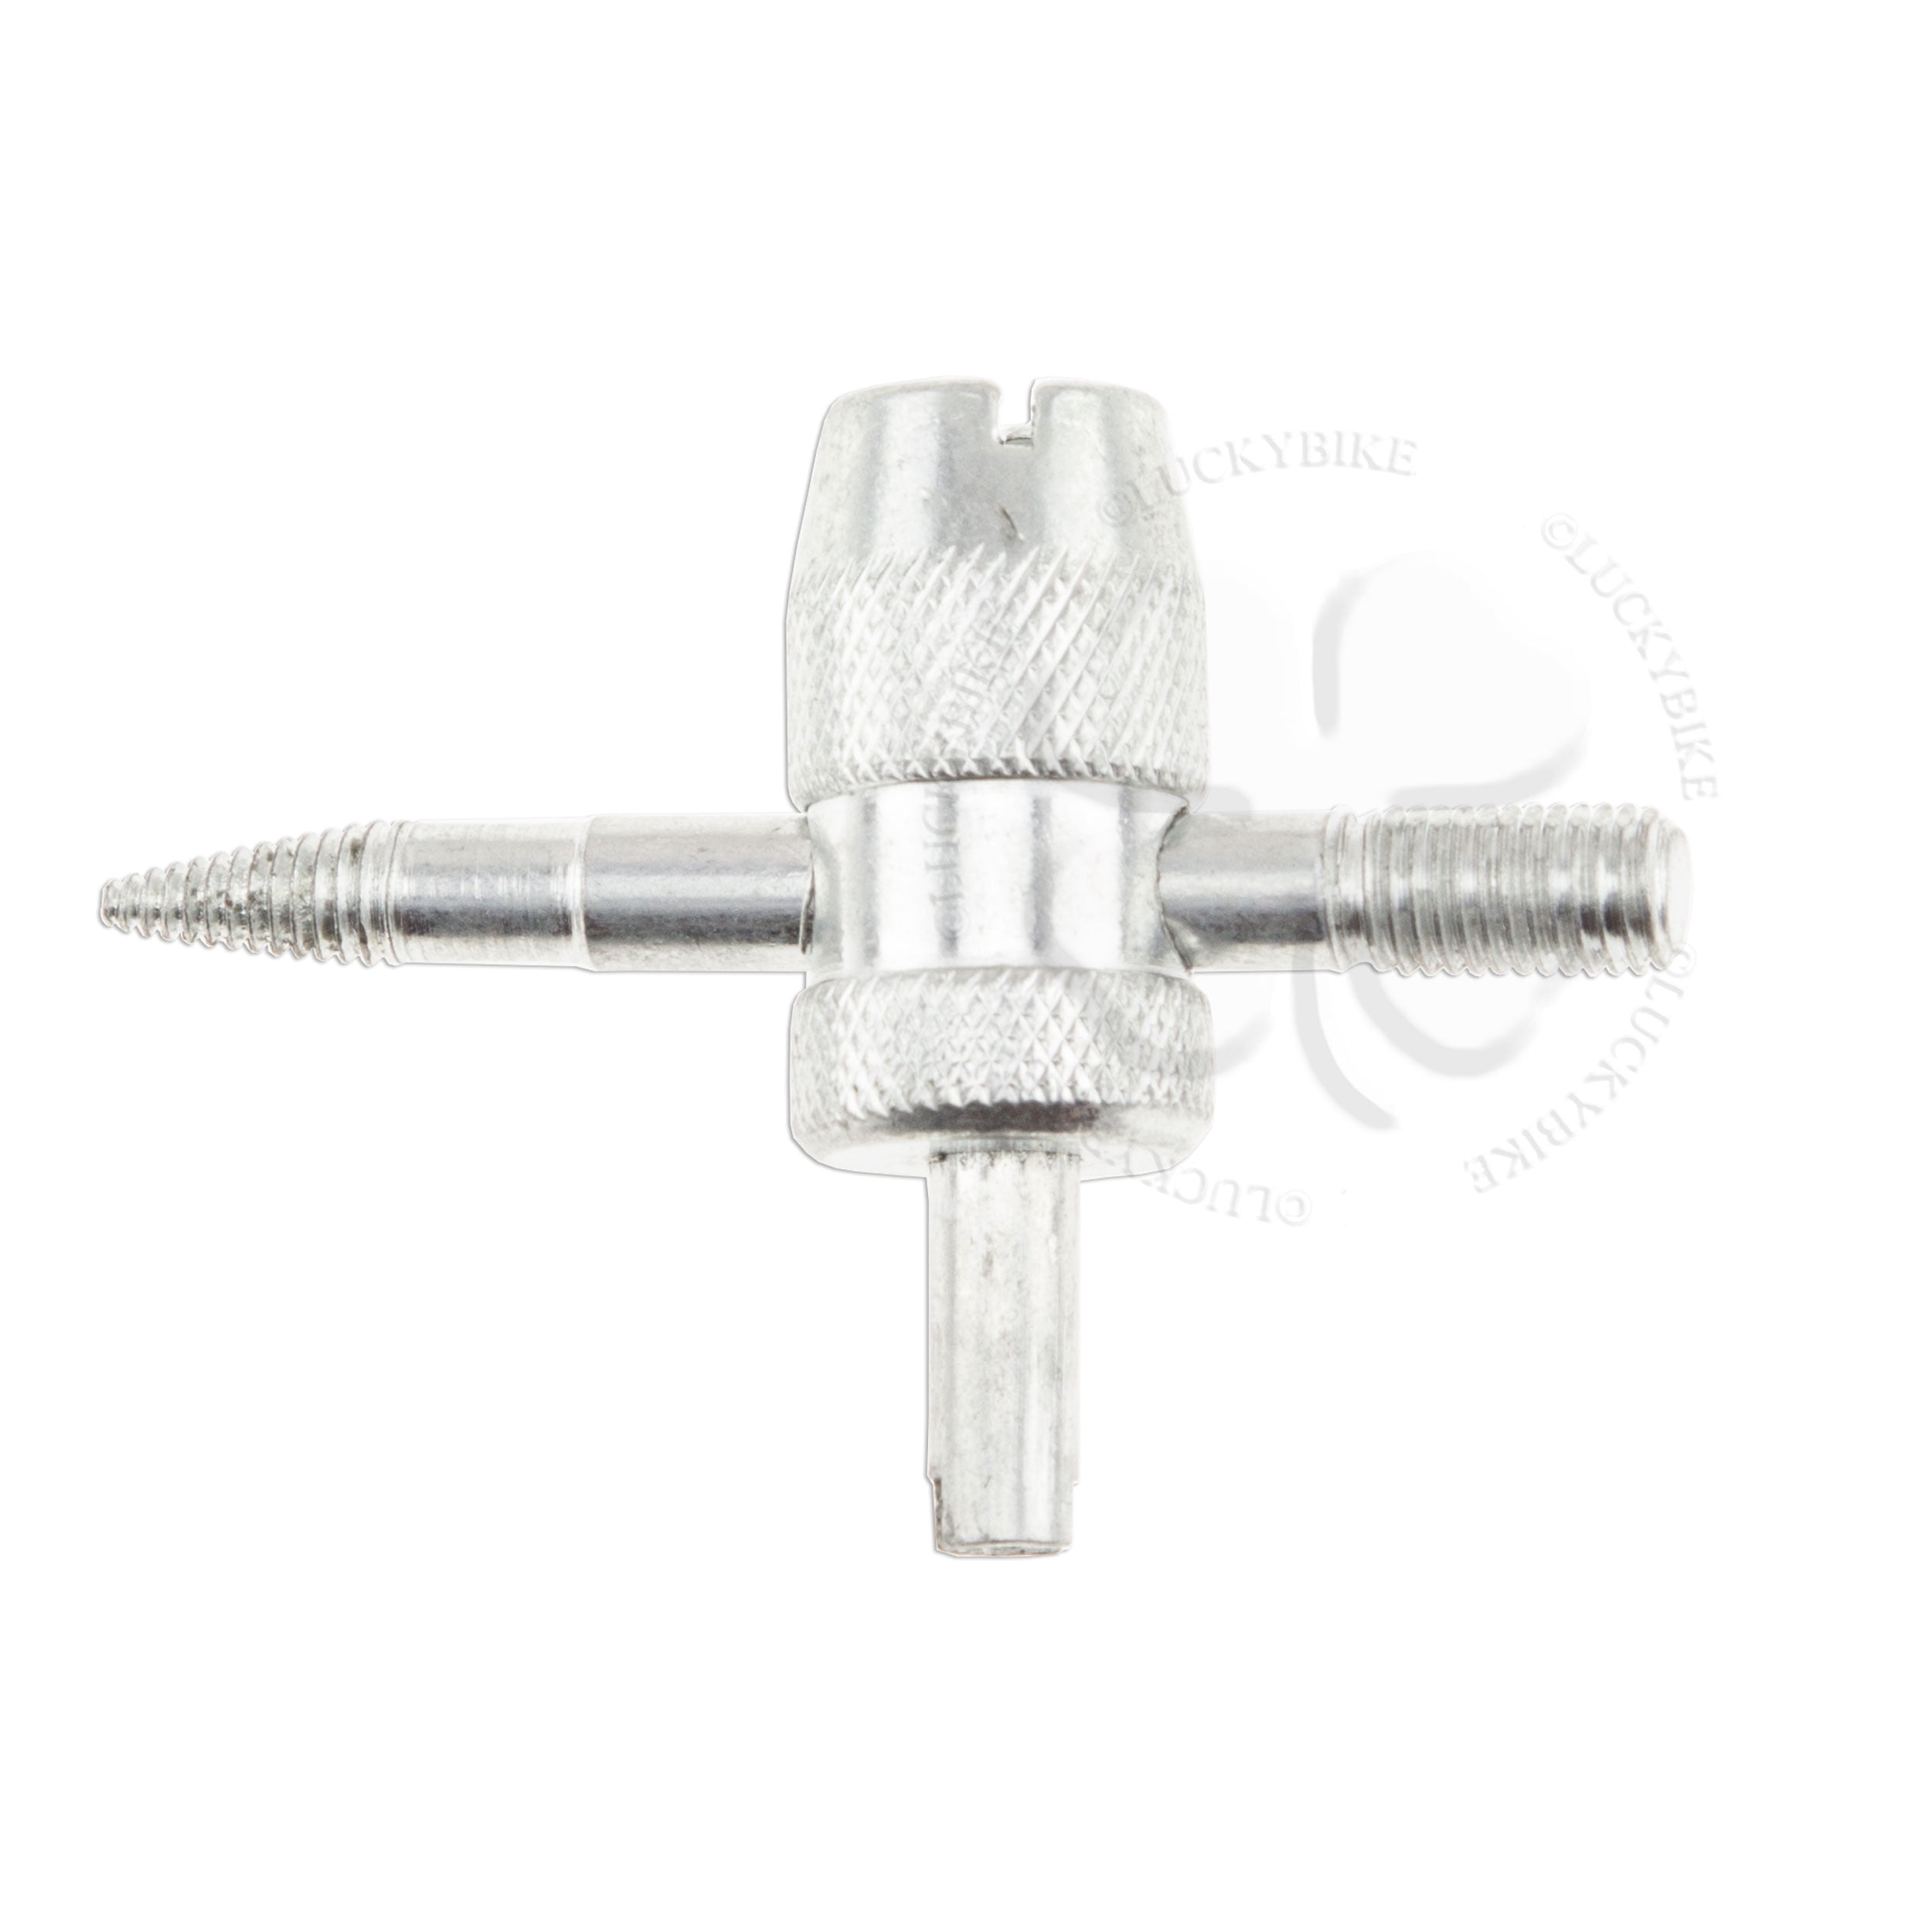 valve stem remover tool